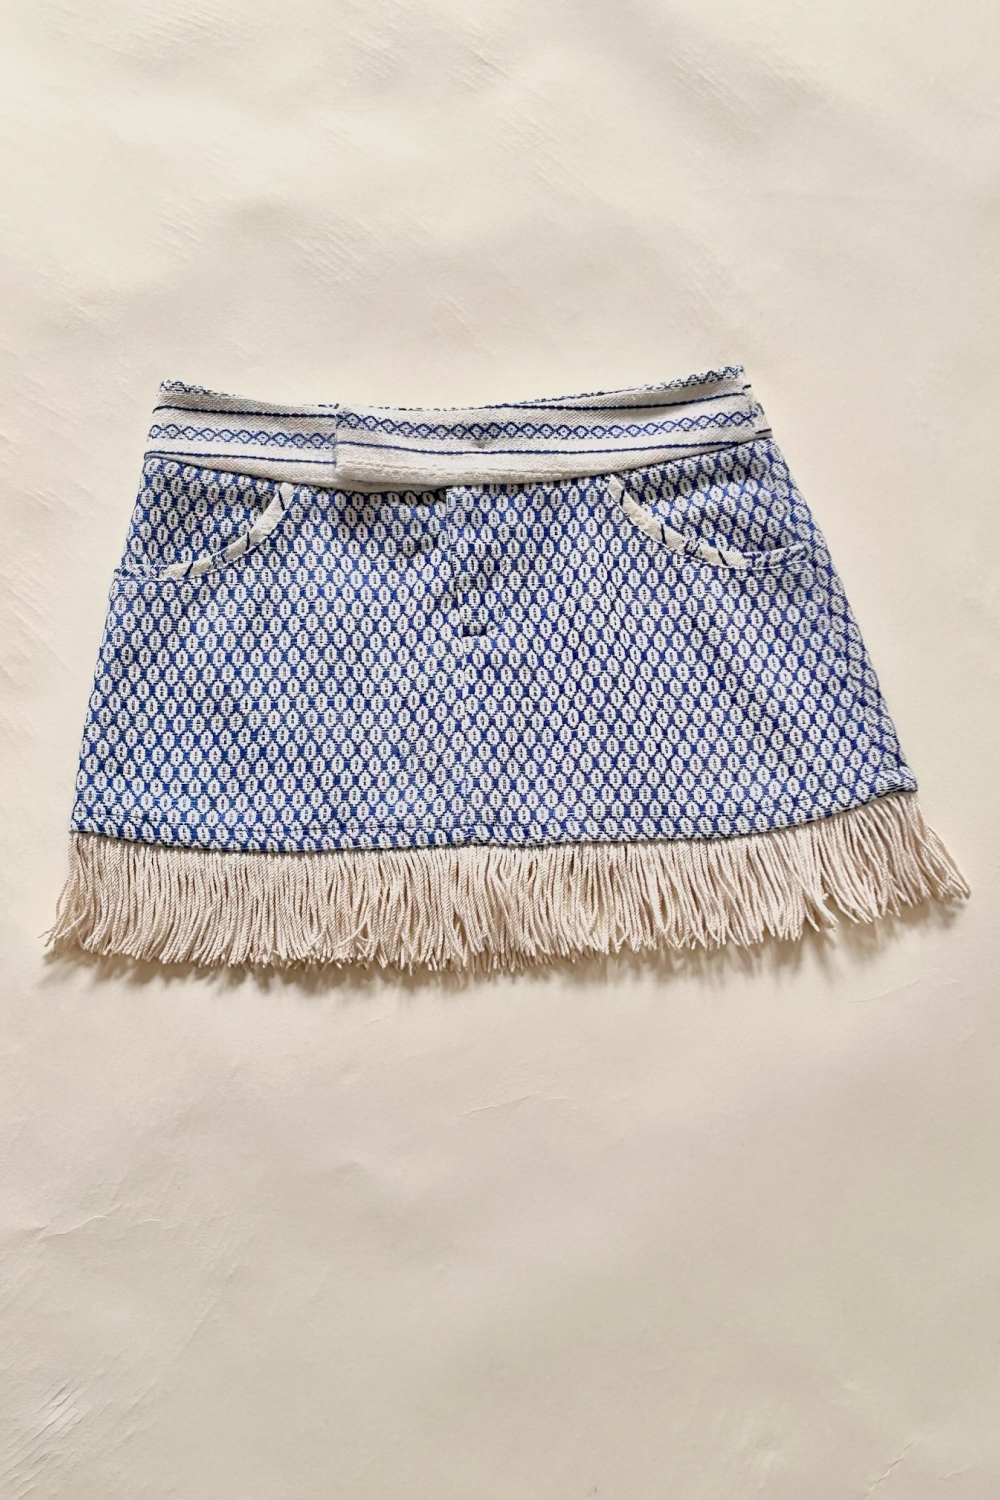 Azul Tassel Skirt Sample Small [UK 8] - Tea & Tequila